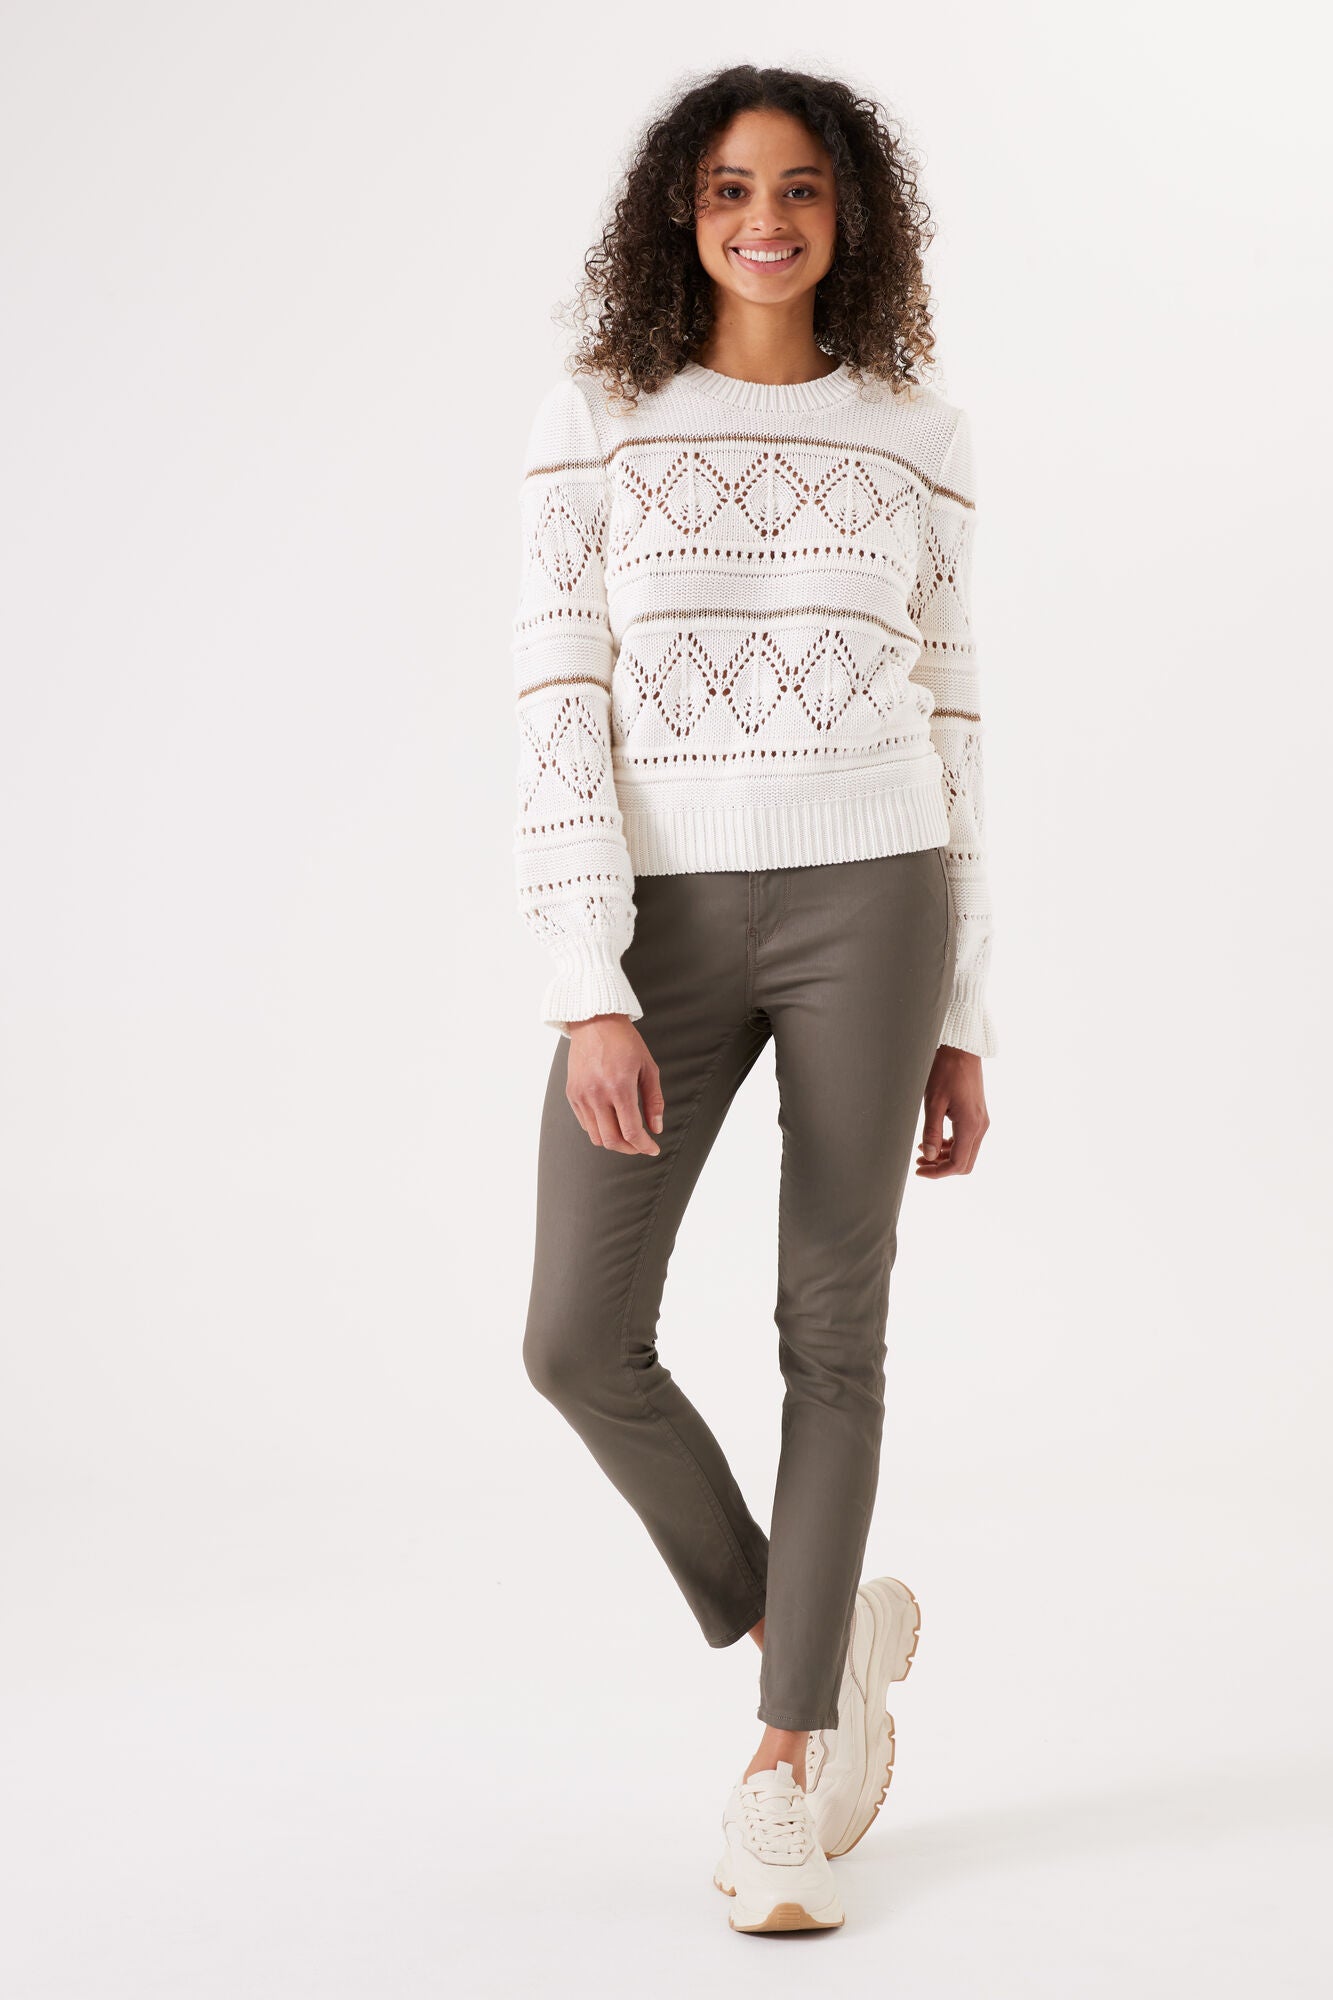 Whitecap Sweater